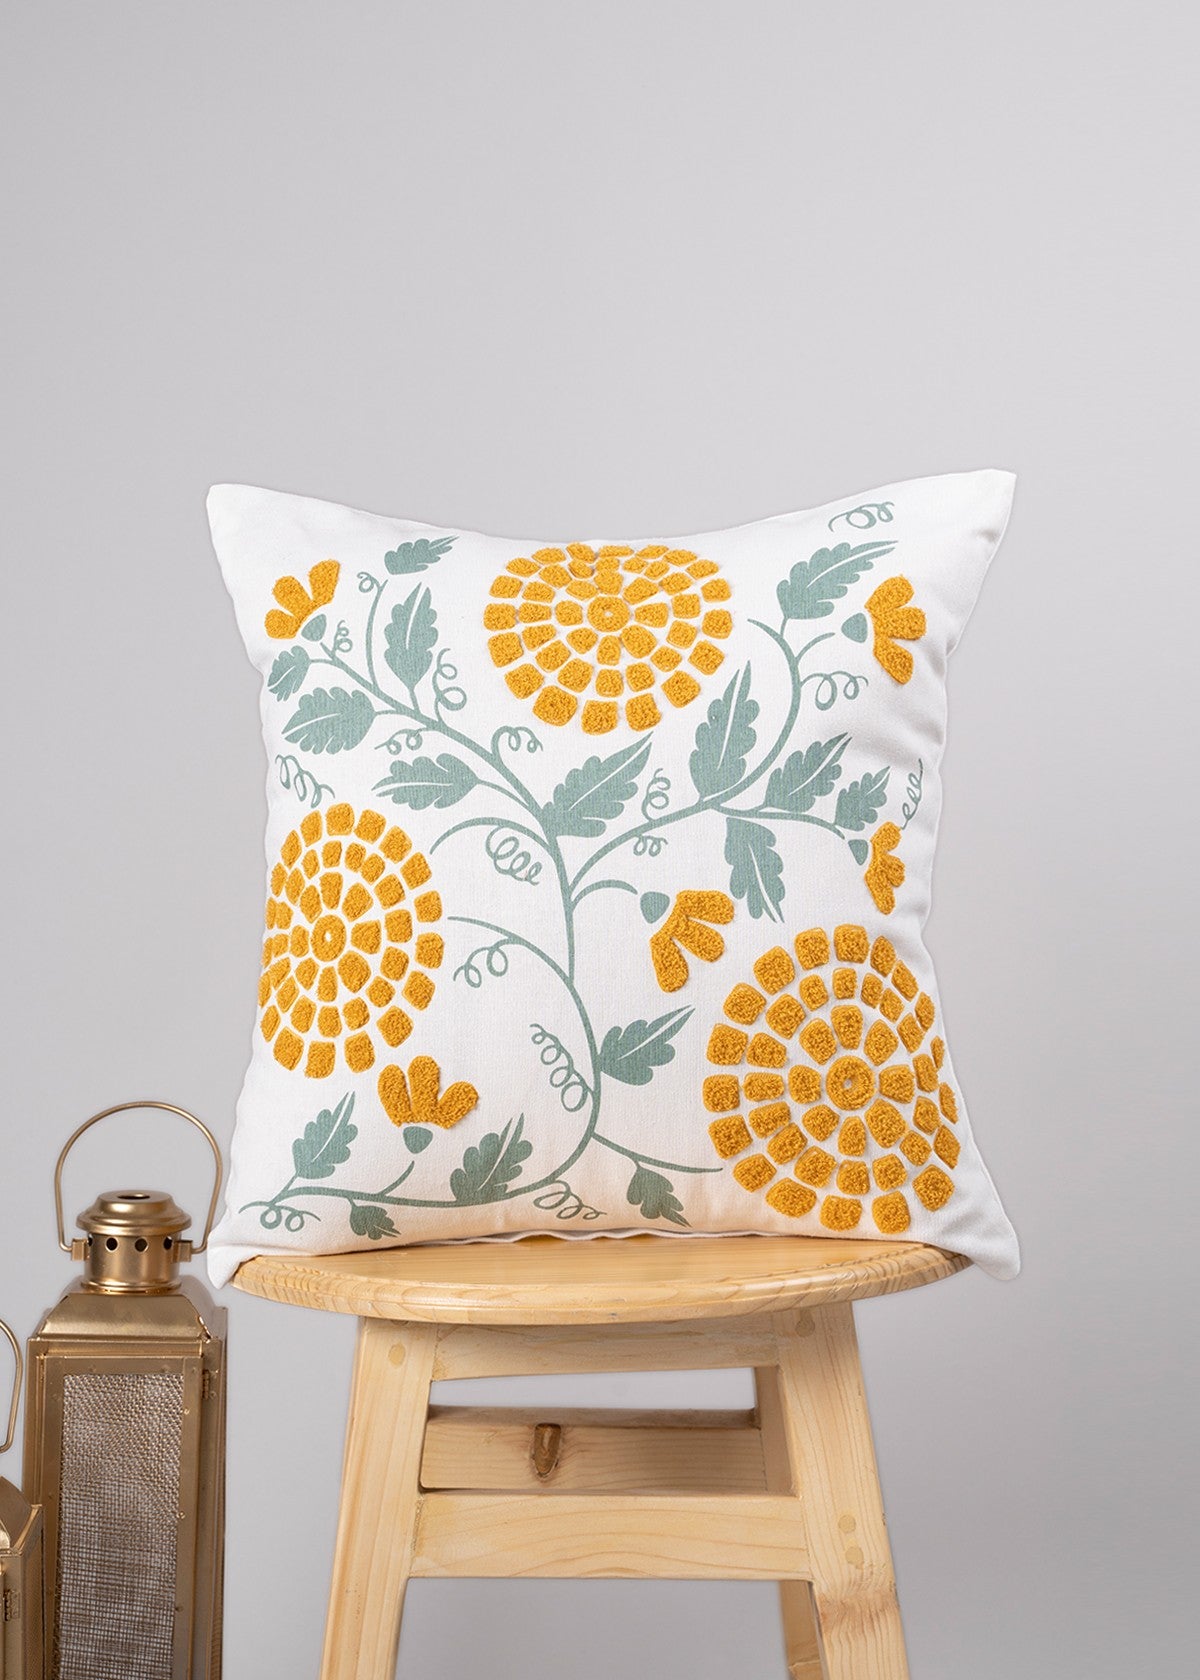 Mystique Marigold Printed Cotton Cushion Cover - Multicolor